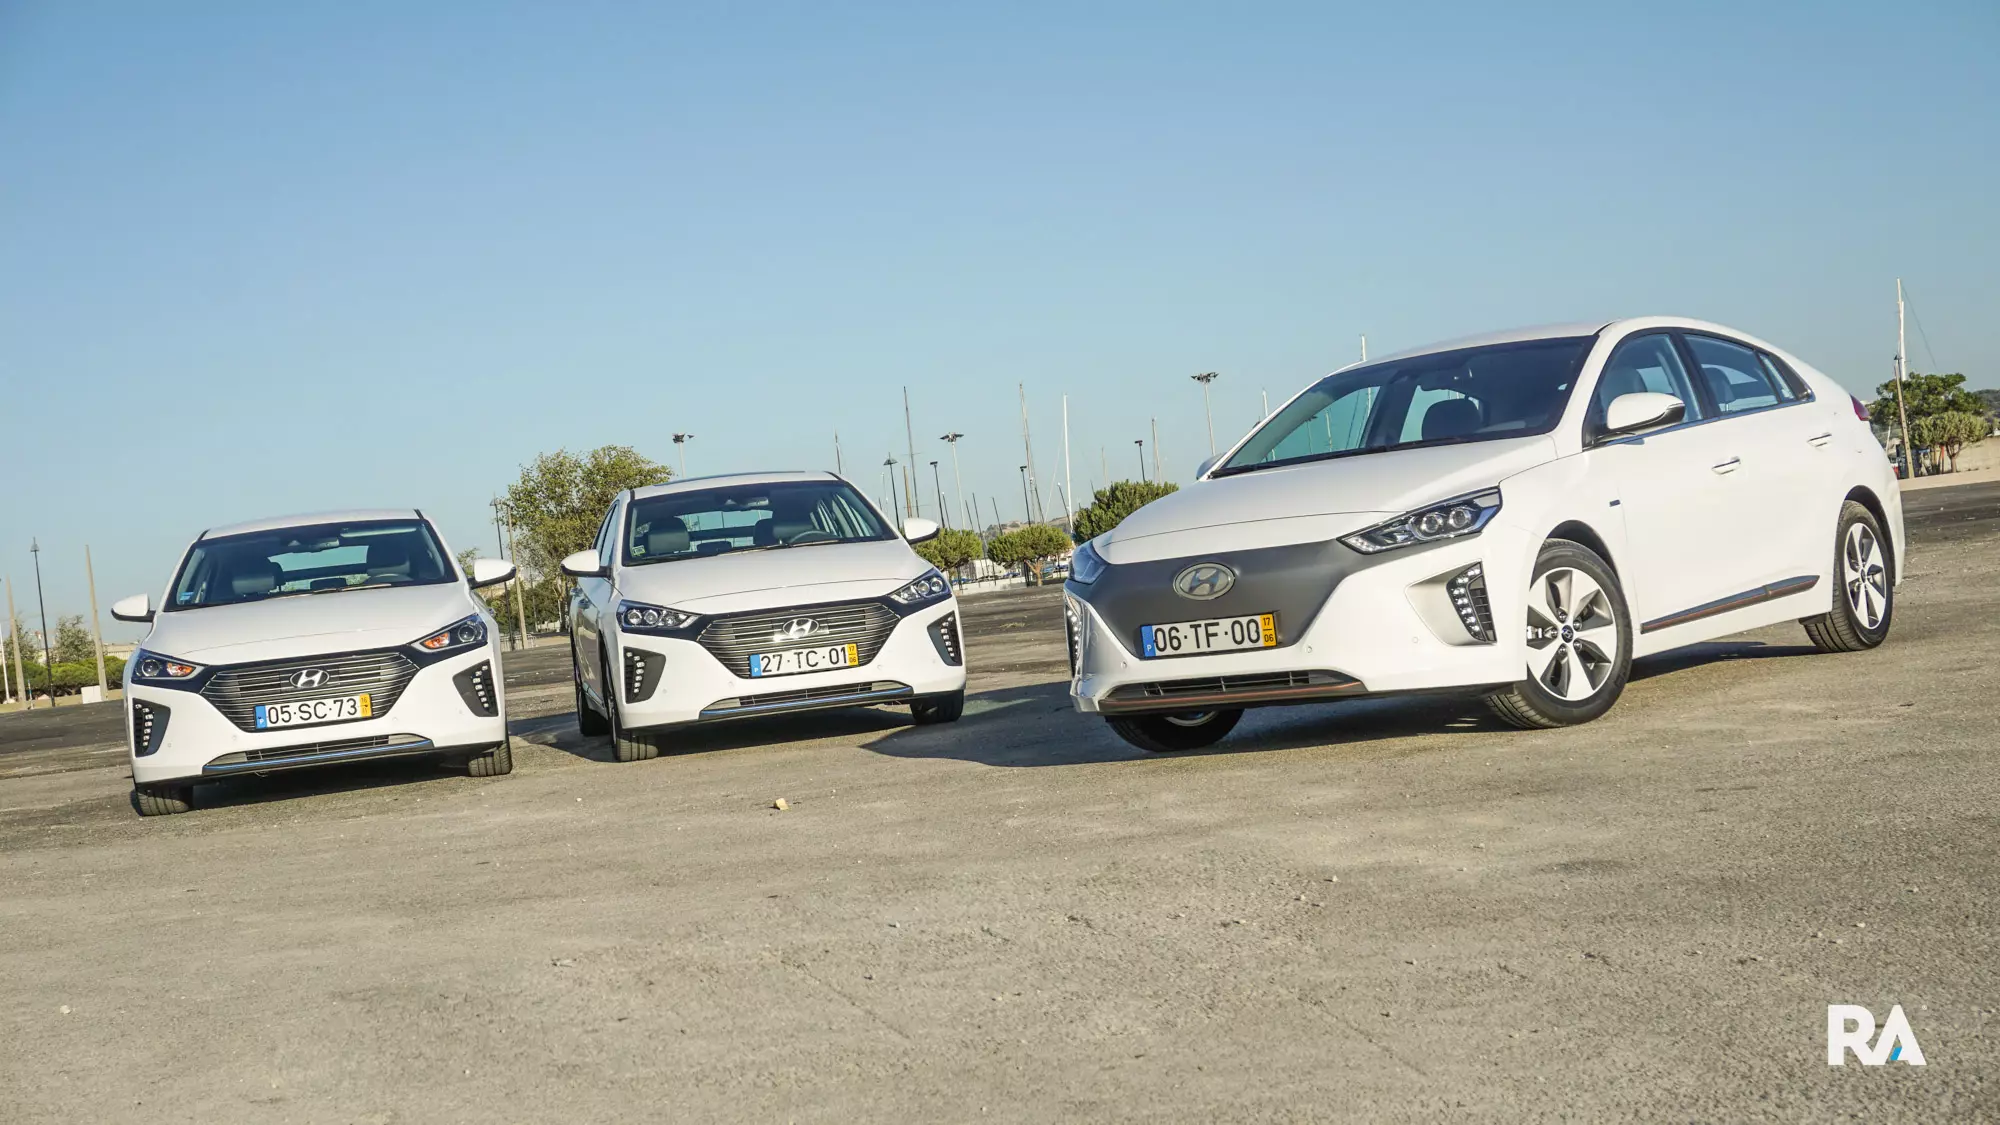 Hyundai Ioniq: ਹਾਈਬ੍ਰਿਡ, ਪਲੱਗ-ਇਨ ਅਤੇ ਇਲੈਕਟ੍ਰਿਕ ਤੁਲਨਾ